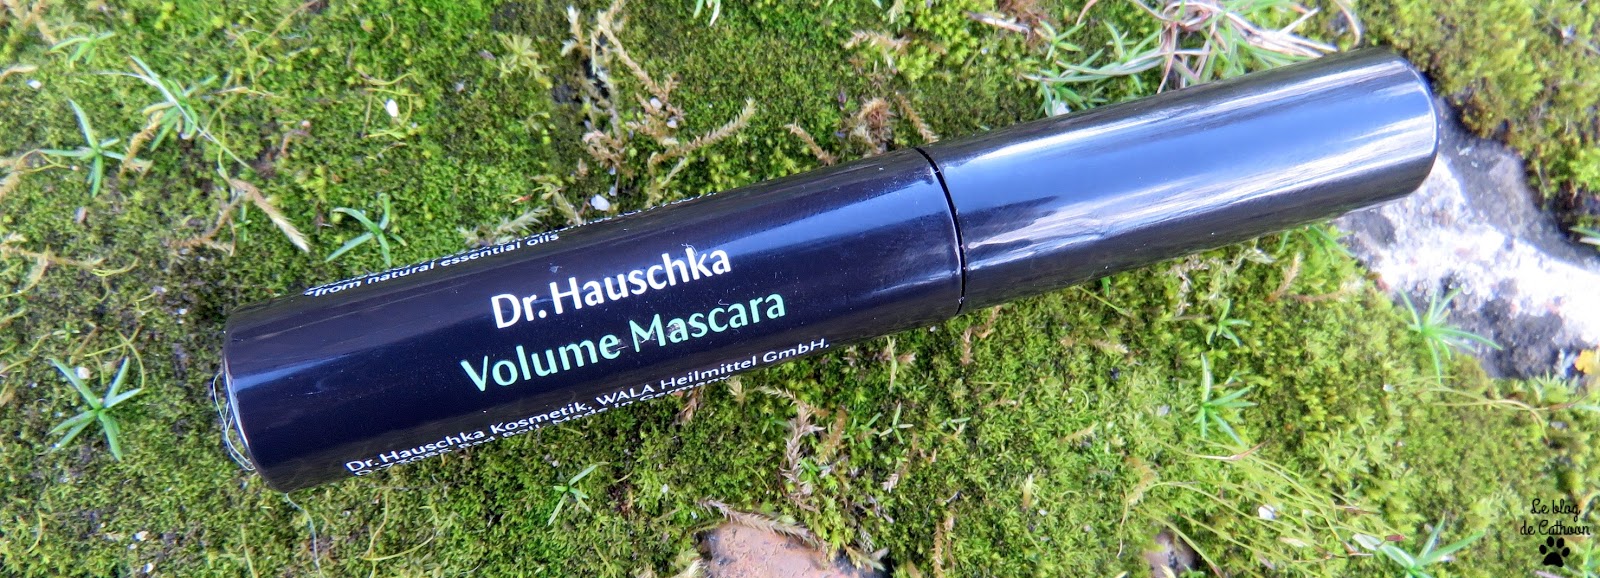 Volume Mascara - Dr Hauschka